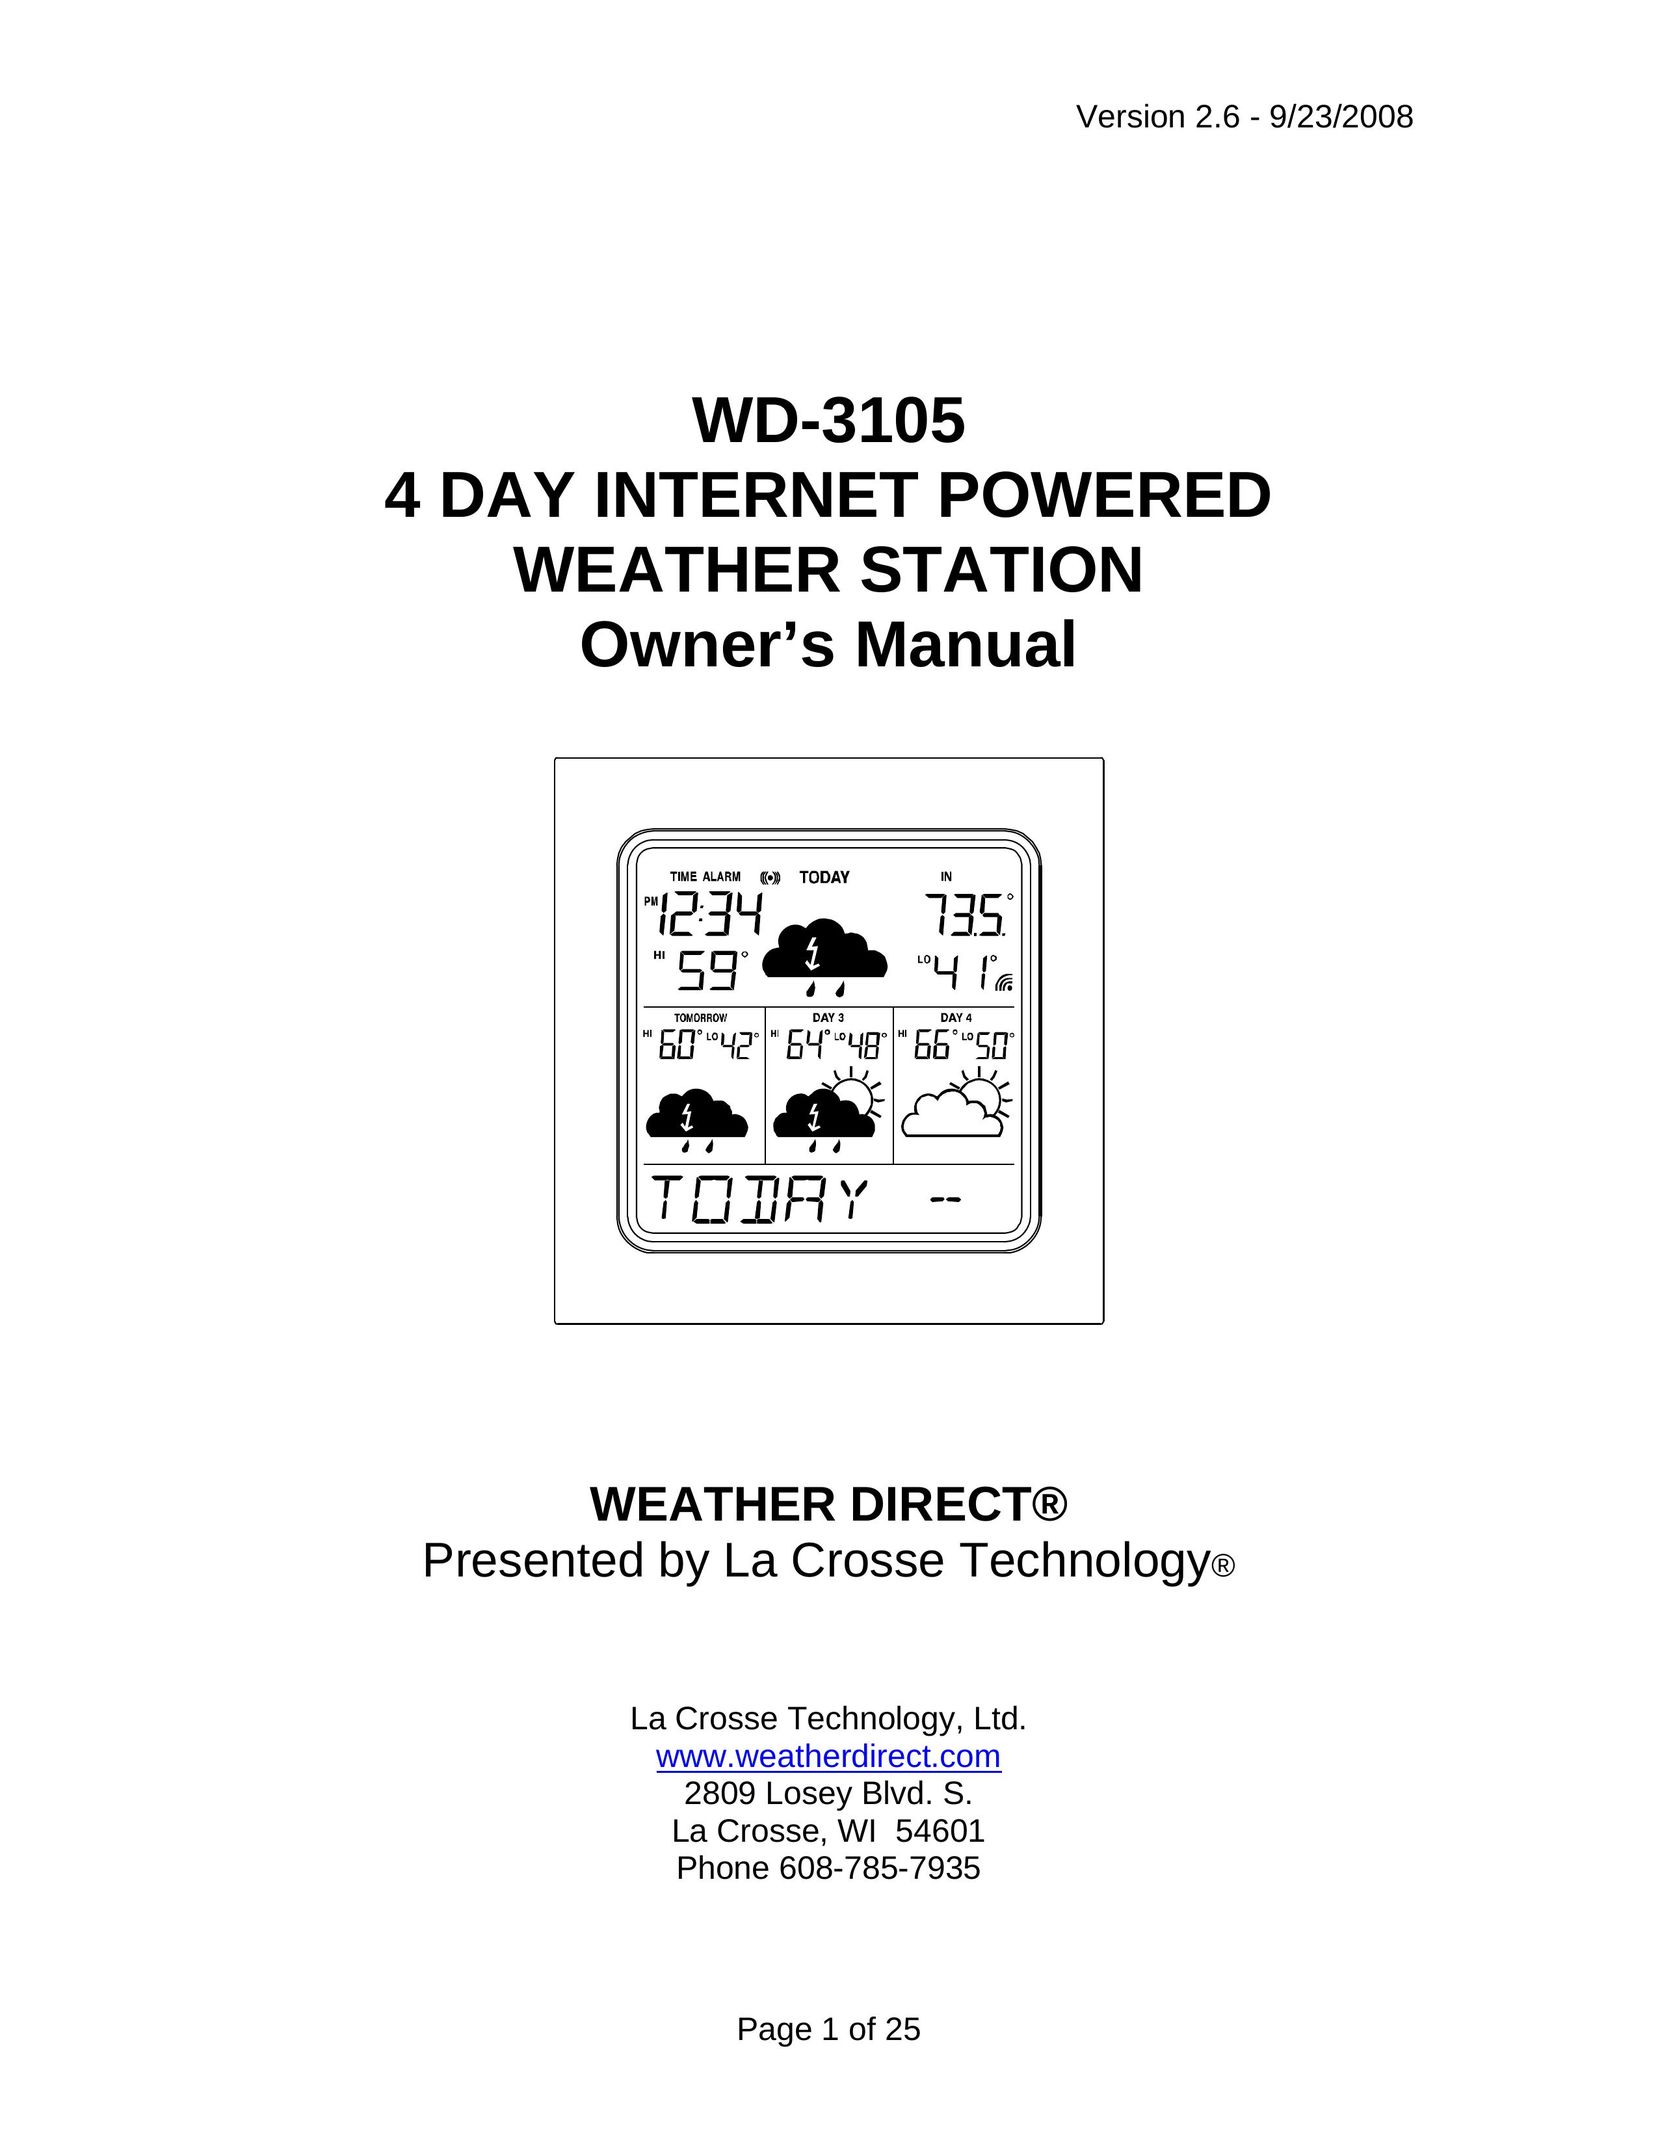 La Crosse Technology WD-3105 Portable Radio User Manual